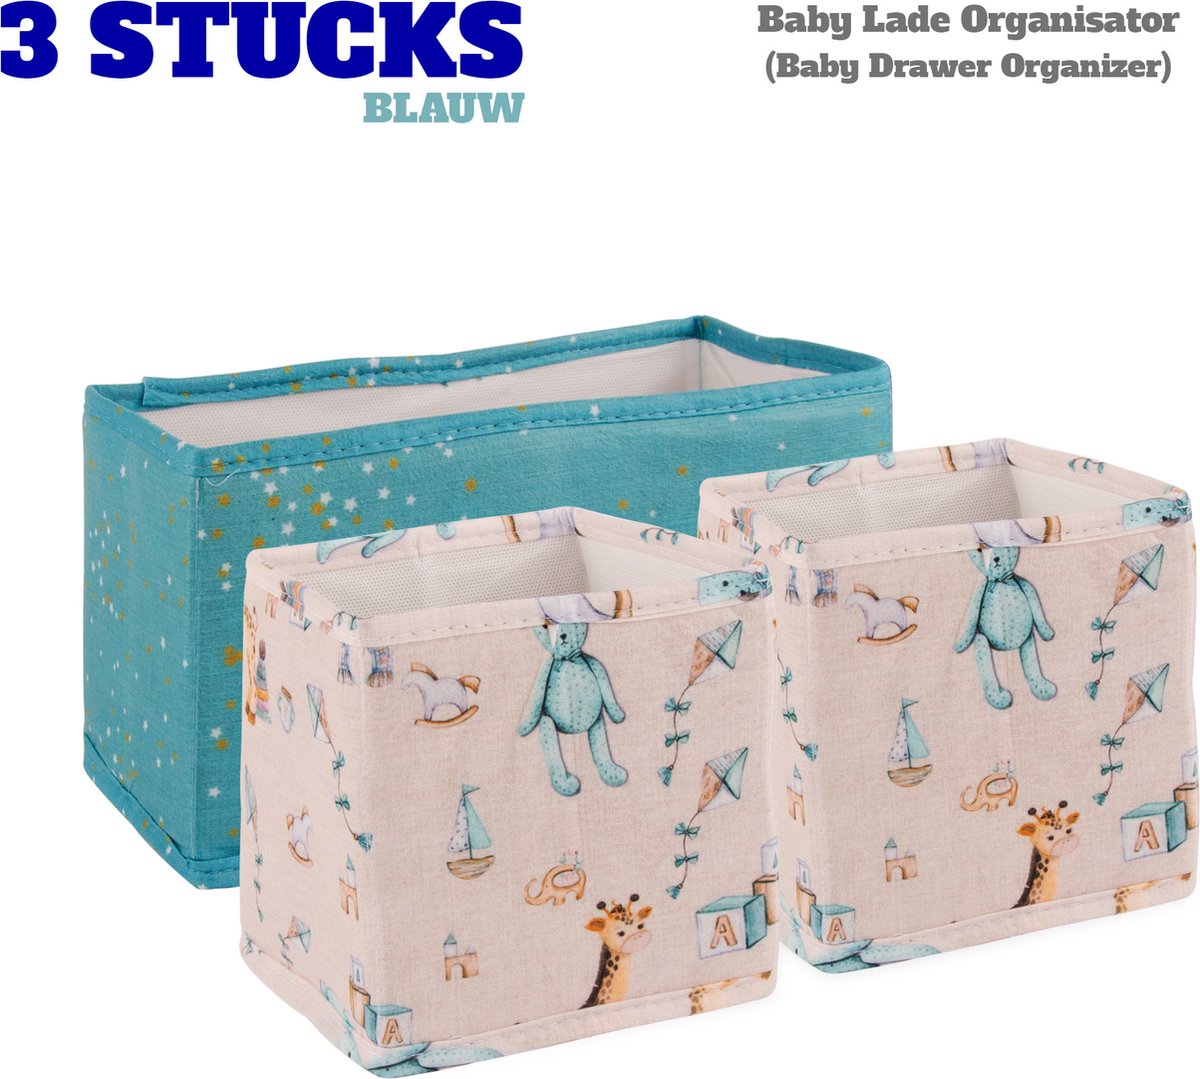 Lade Organizer - Set van 3 stuks Opbergboxen - Babykamer Organizer accessoires - Kinderkamer decoratie - speelgoeddoos Blauwe kleur